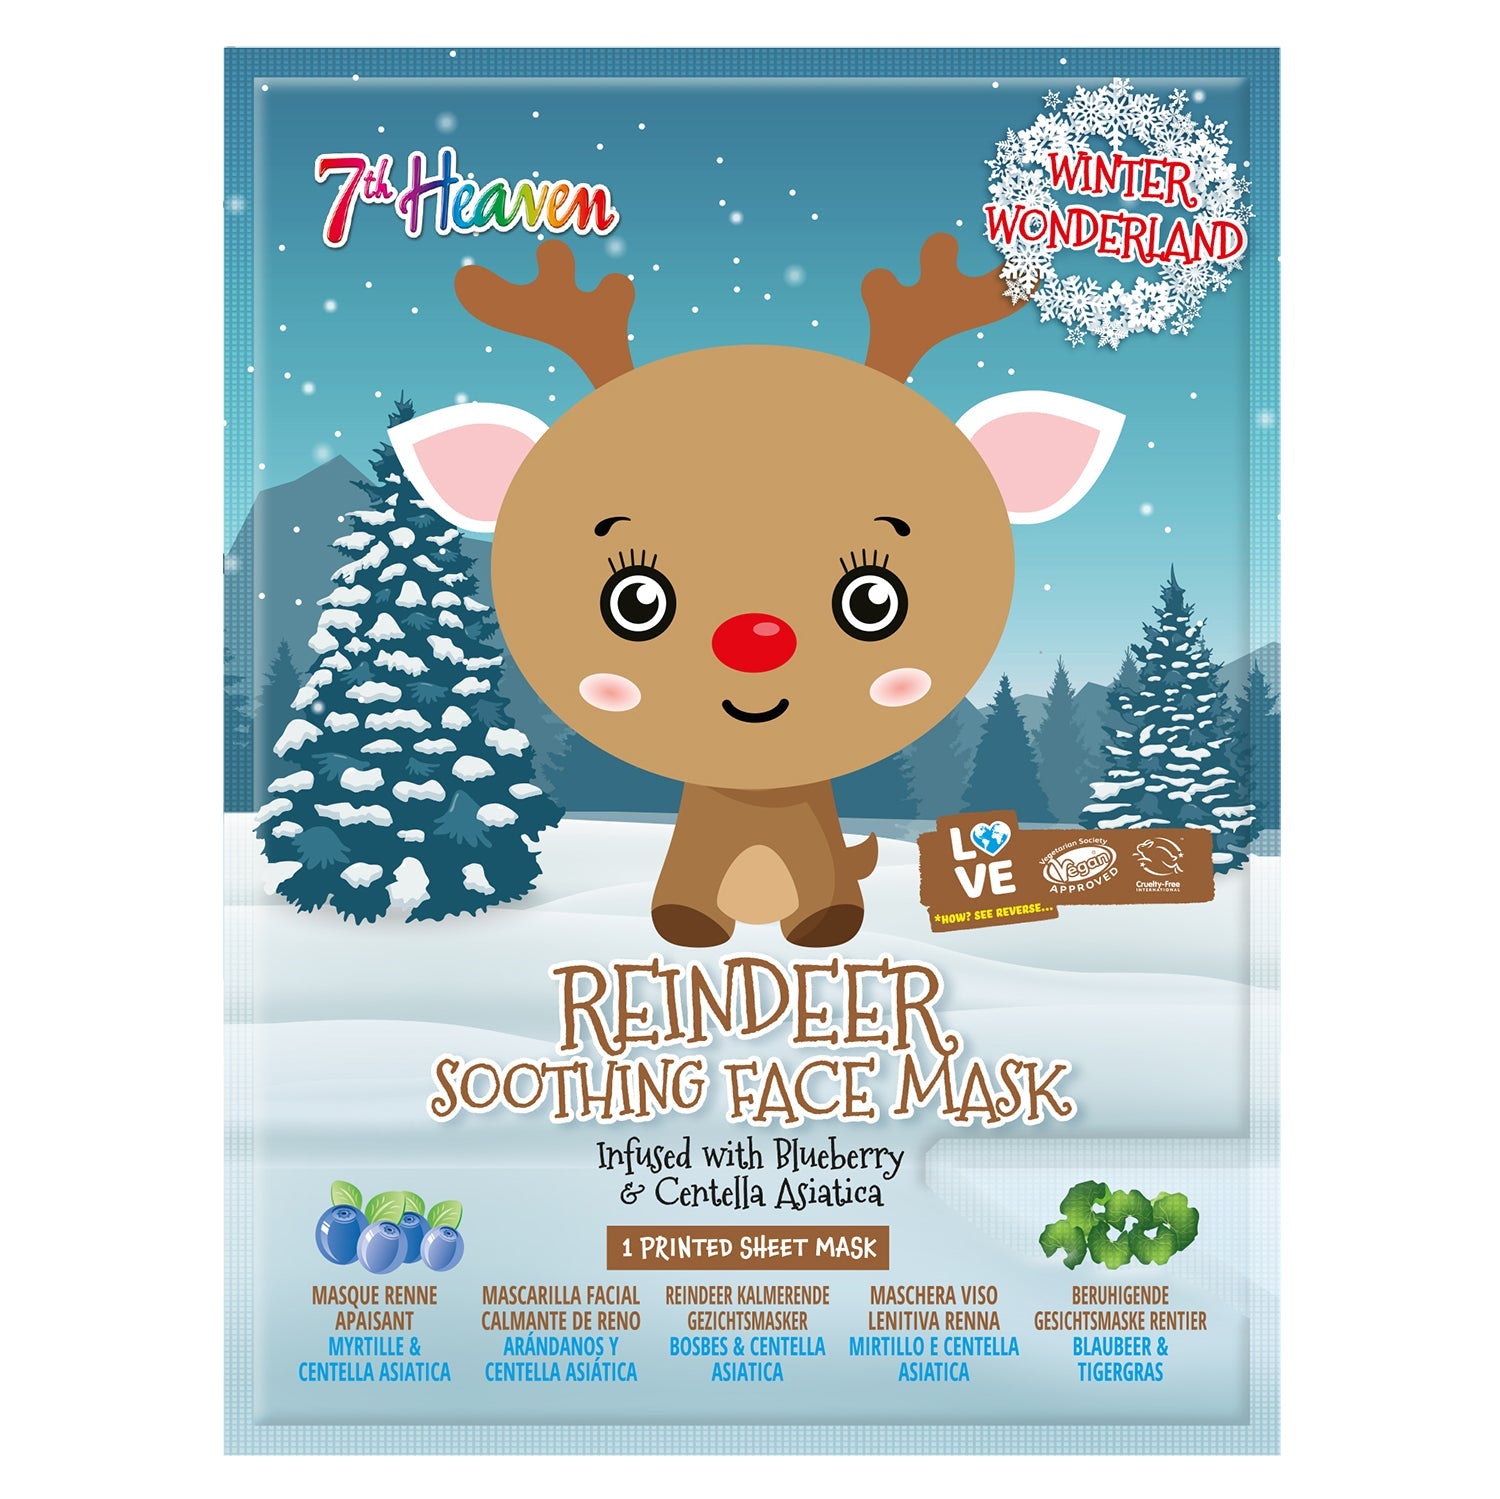 7th Heaven Winter Wonderland - Reindeer Sheet Mask - Creata Beauty - Professional Beauty Products